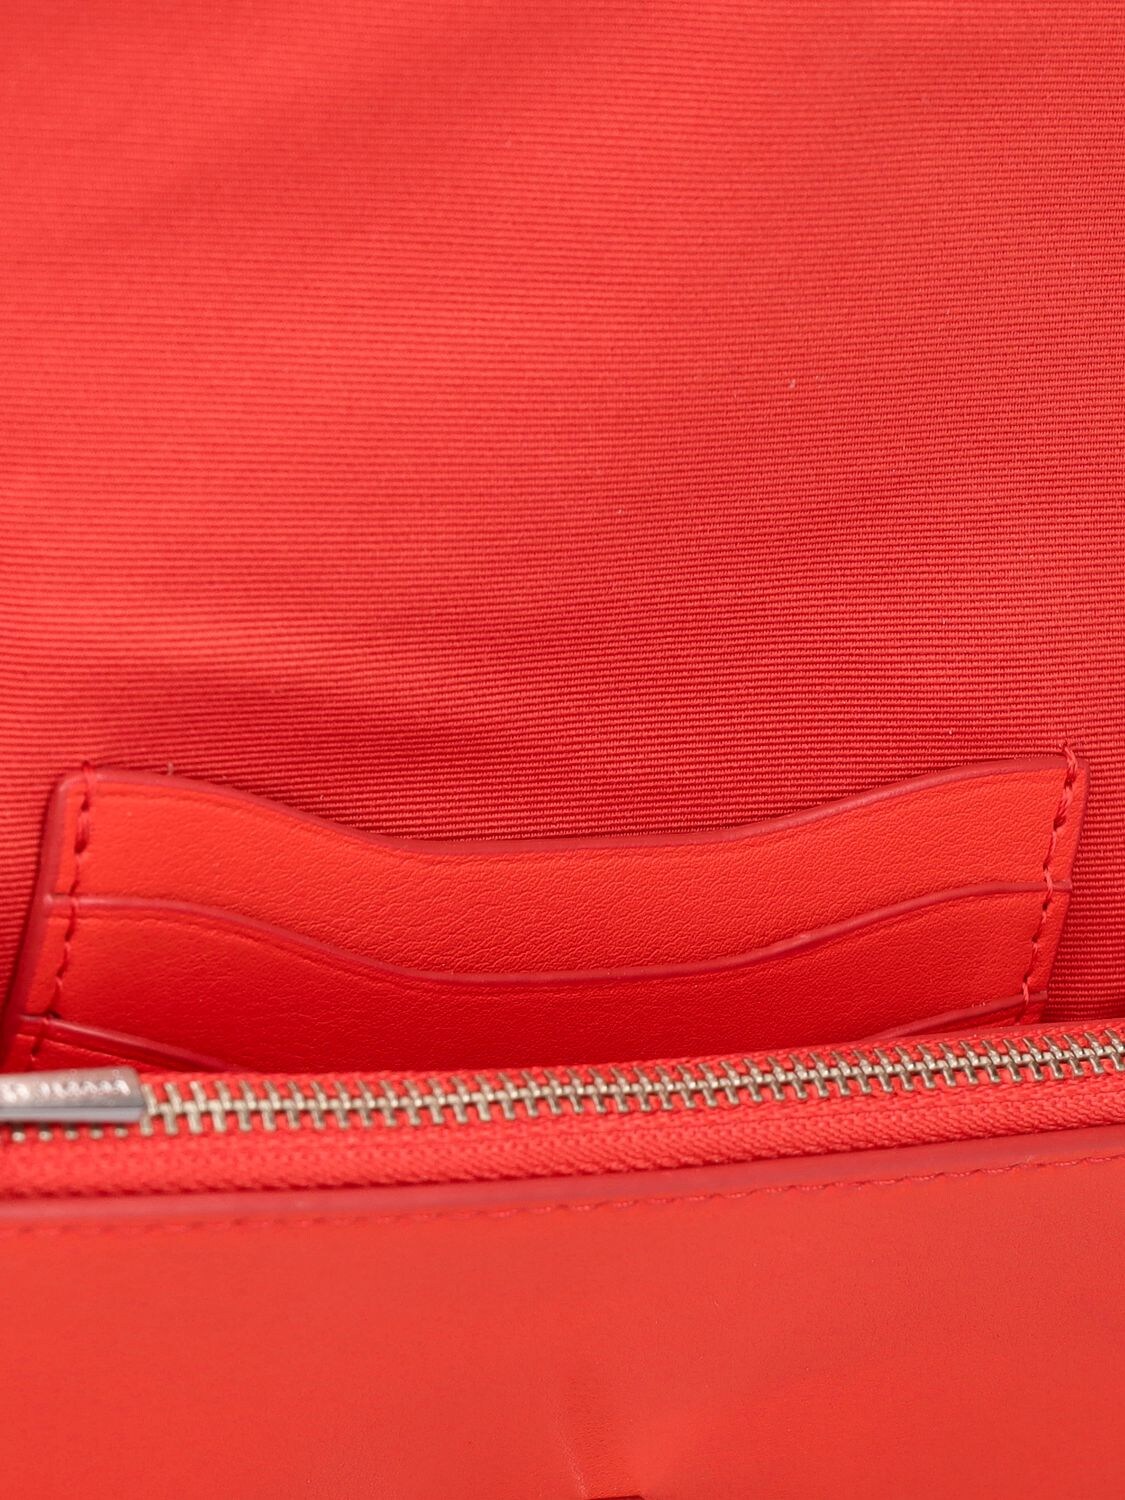 Shop Marc Jacobs The Mini J Marc Leather Shoulder Bag In Electric Orange